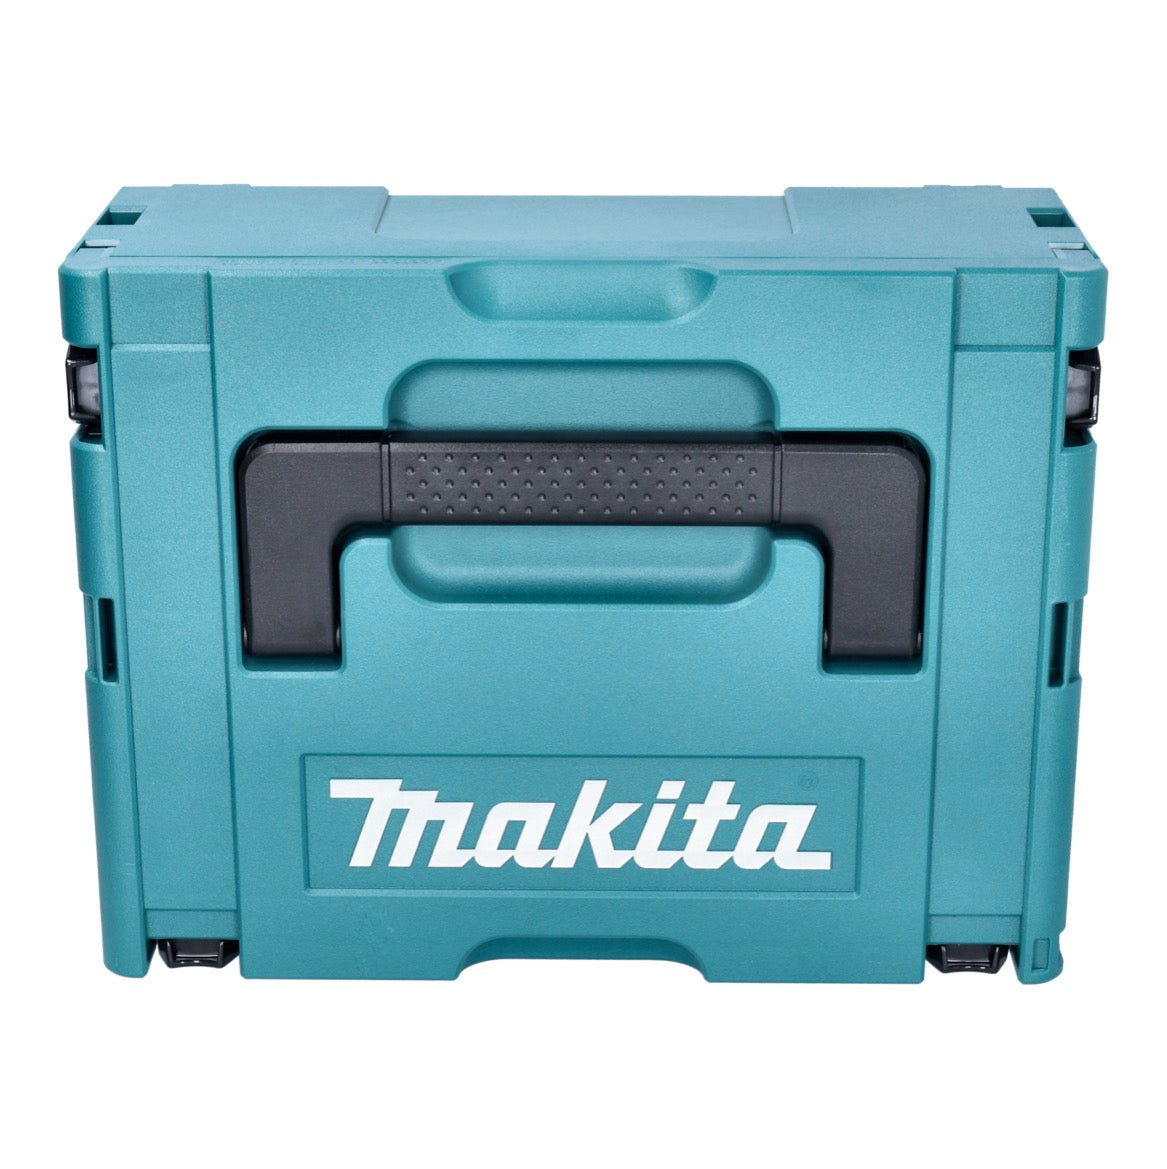 Makita BO 5041 J Exzenterschleifer Schleifmaschine 300 W 125 mm + Toolbrothers TURTLE Schleifset + Makpac - Toolbrothers